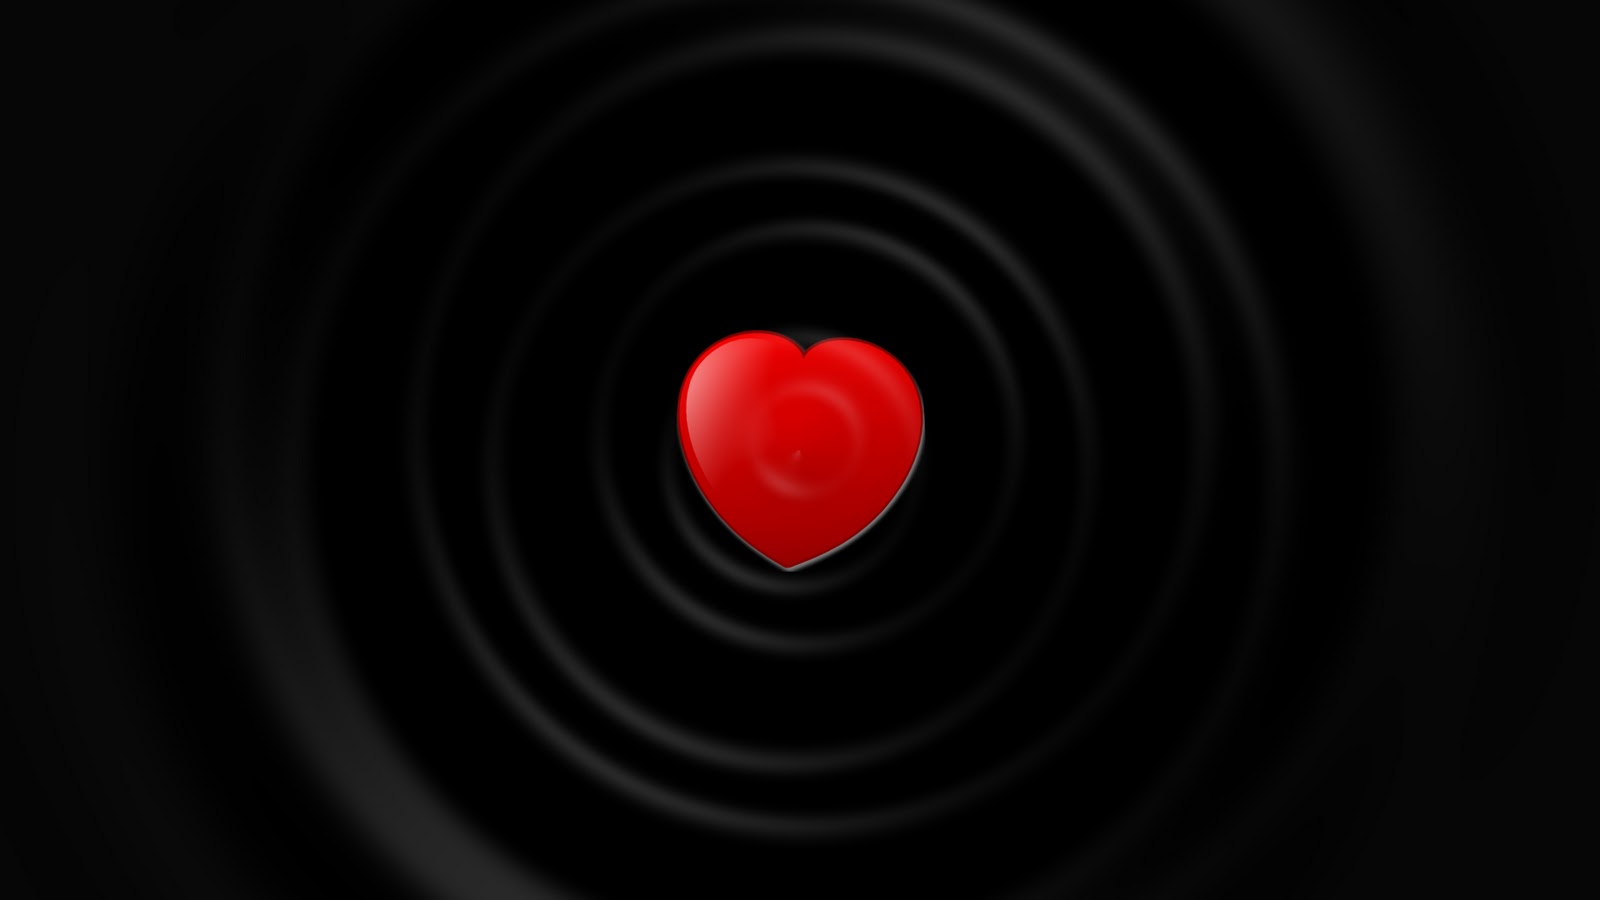 https://blogger.googleusercontent.com/img/b/R29vZ2xl/AVvXsEh6p_6RRzIoLbN6E9vj0hTimlH_fENPznaxA_2rHDNPiX55nDfOxW5GE9jha66p69Mz07Rid8qeFT0xRtmGqTzn732G8uVf0ZwWEVQXEfinGvKvl3BZTwhO9iIiDNjjVZdJjutwYntzysTh/s1600/hd-love-wallpaper-love-heart-red.jpg